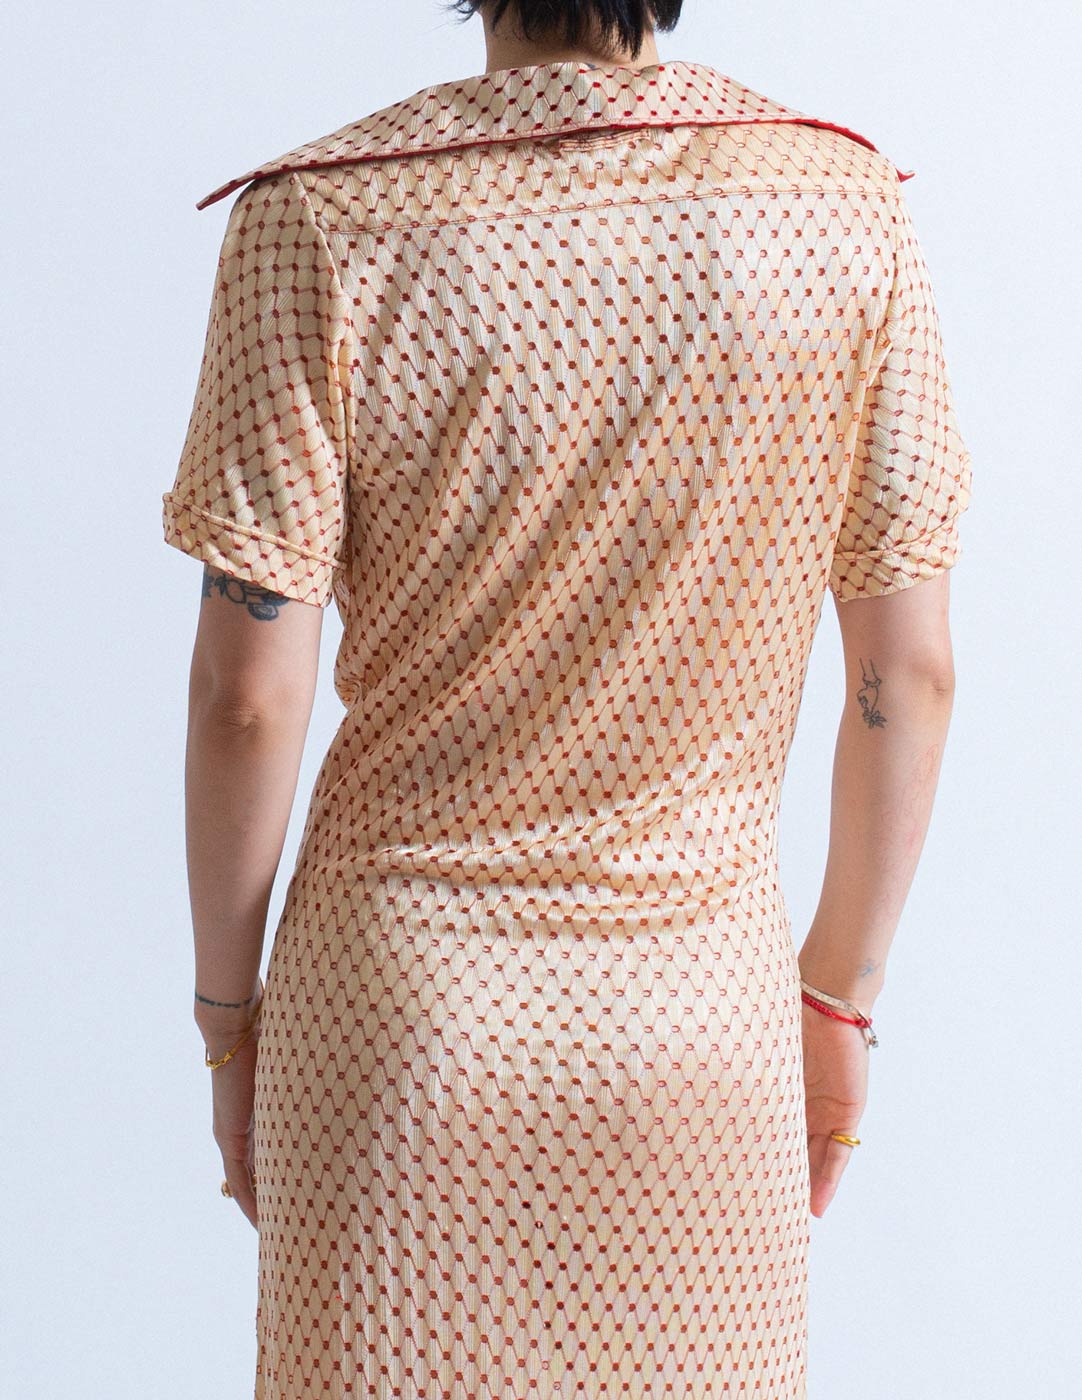 Jean Paul Gaultier vintage perforated drape dress back detail